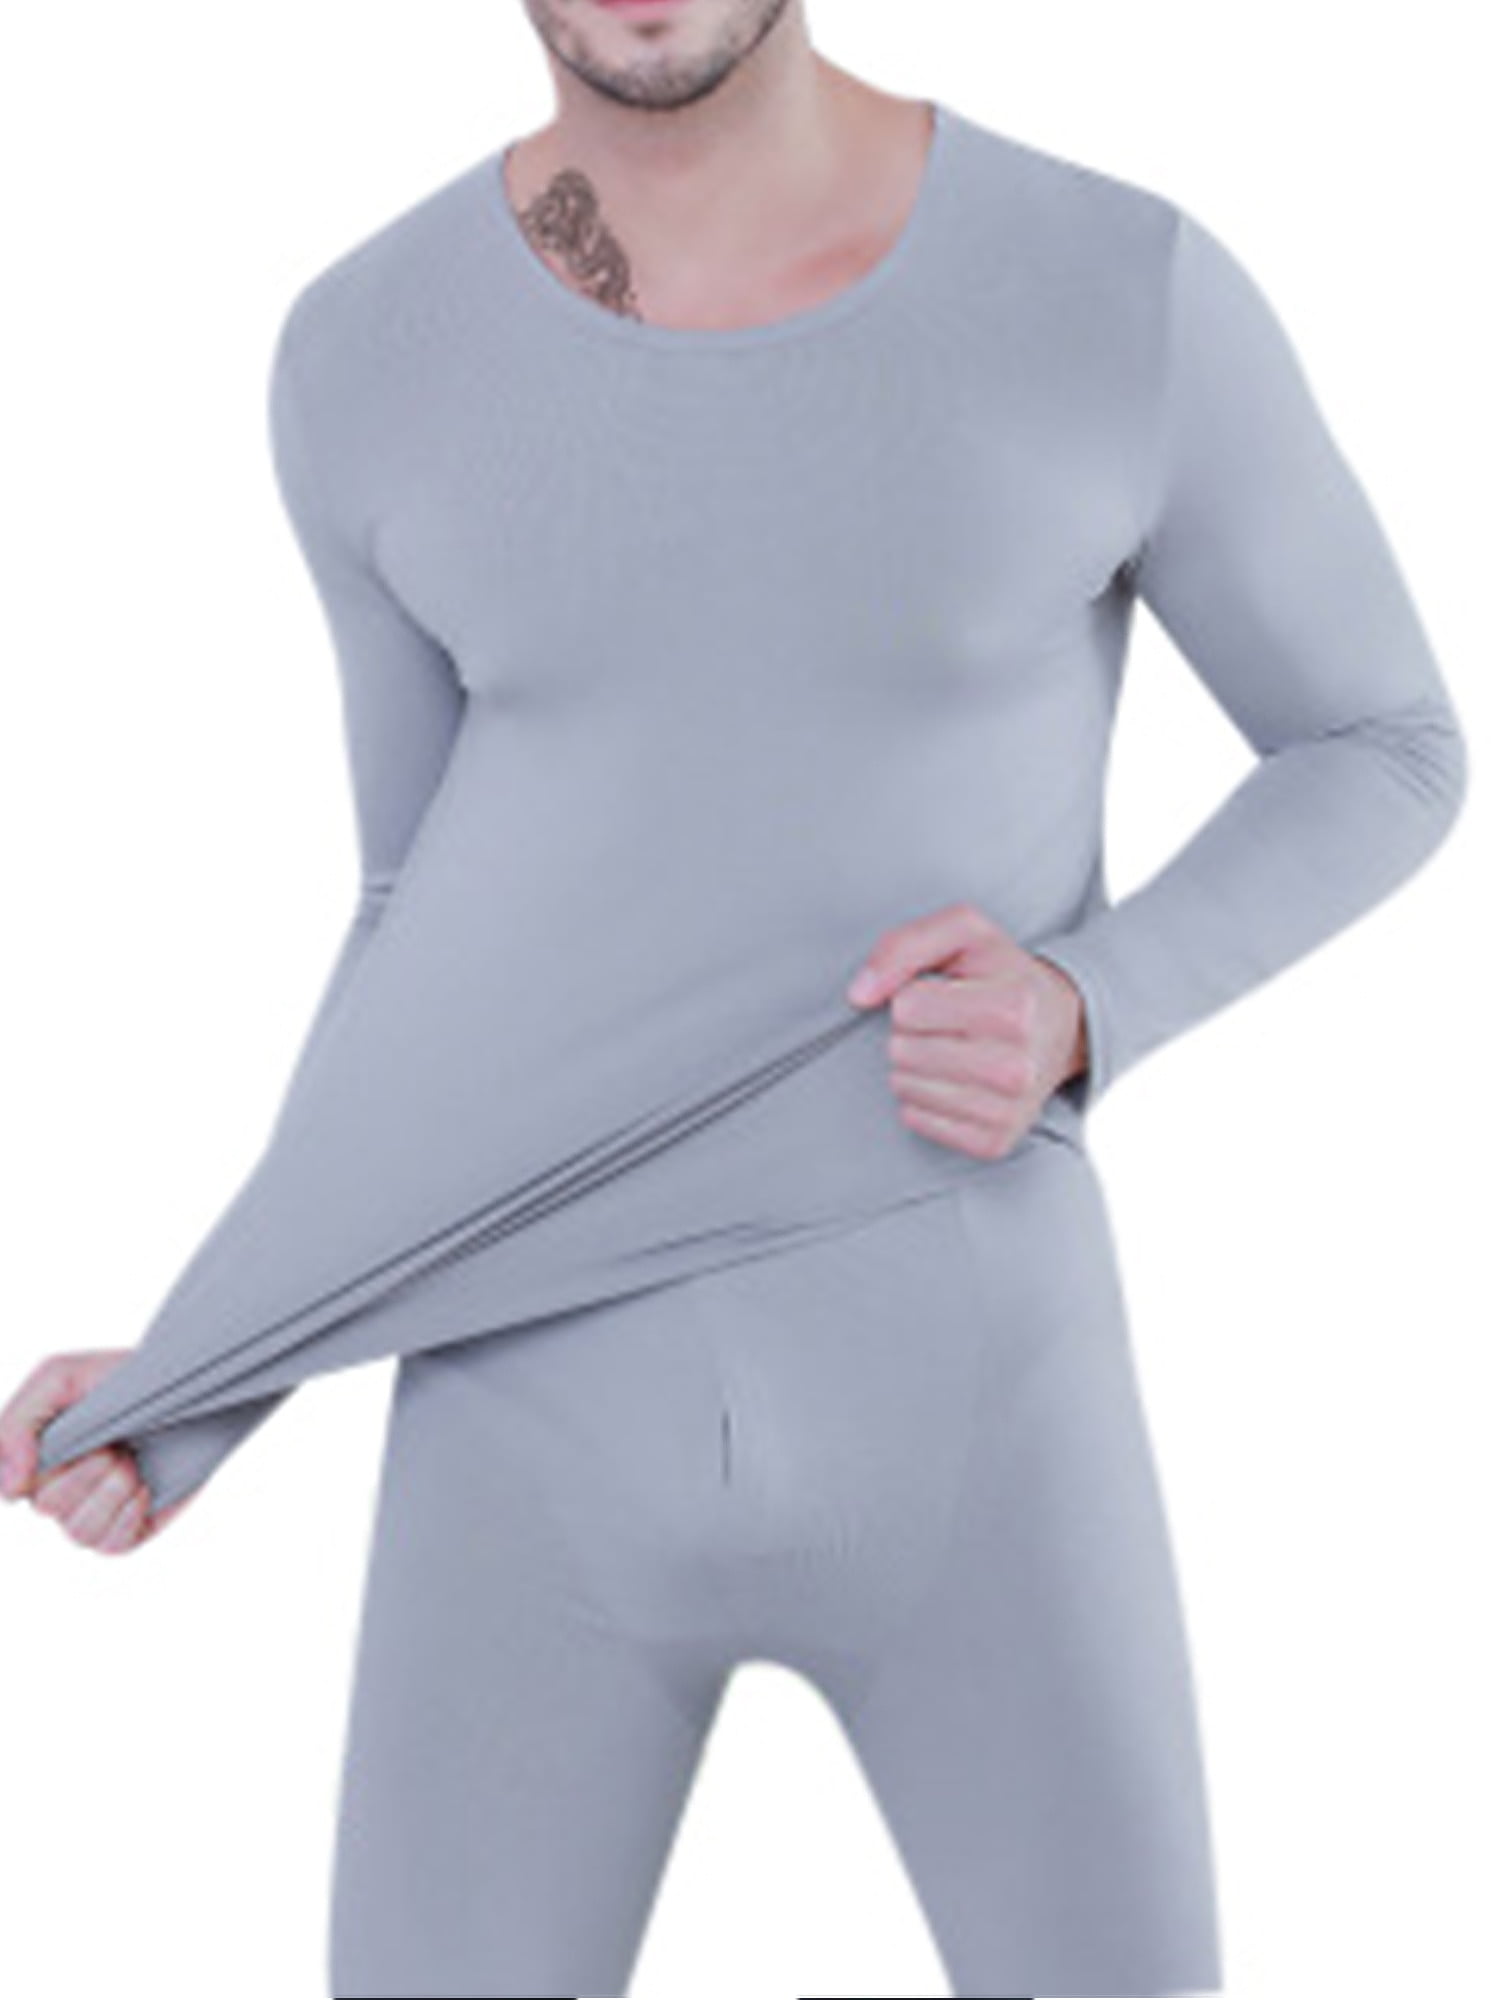 Gilbin Men's Ultra Soft Thermal Underwear Long Johns Sets 2pc Top